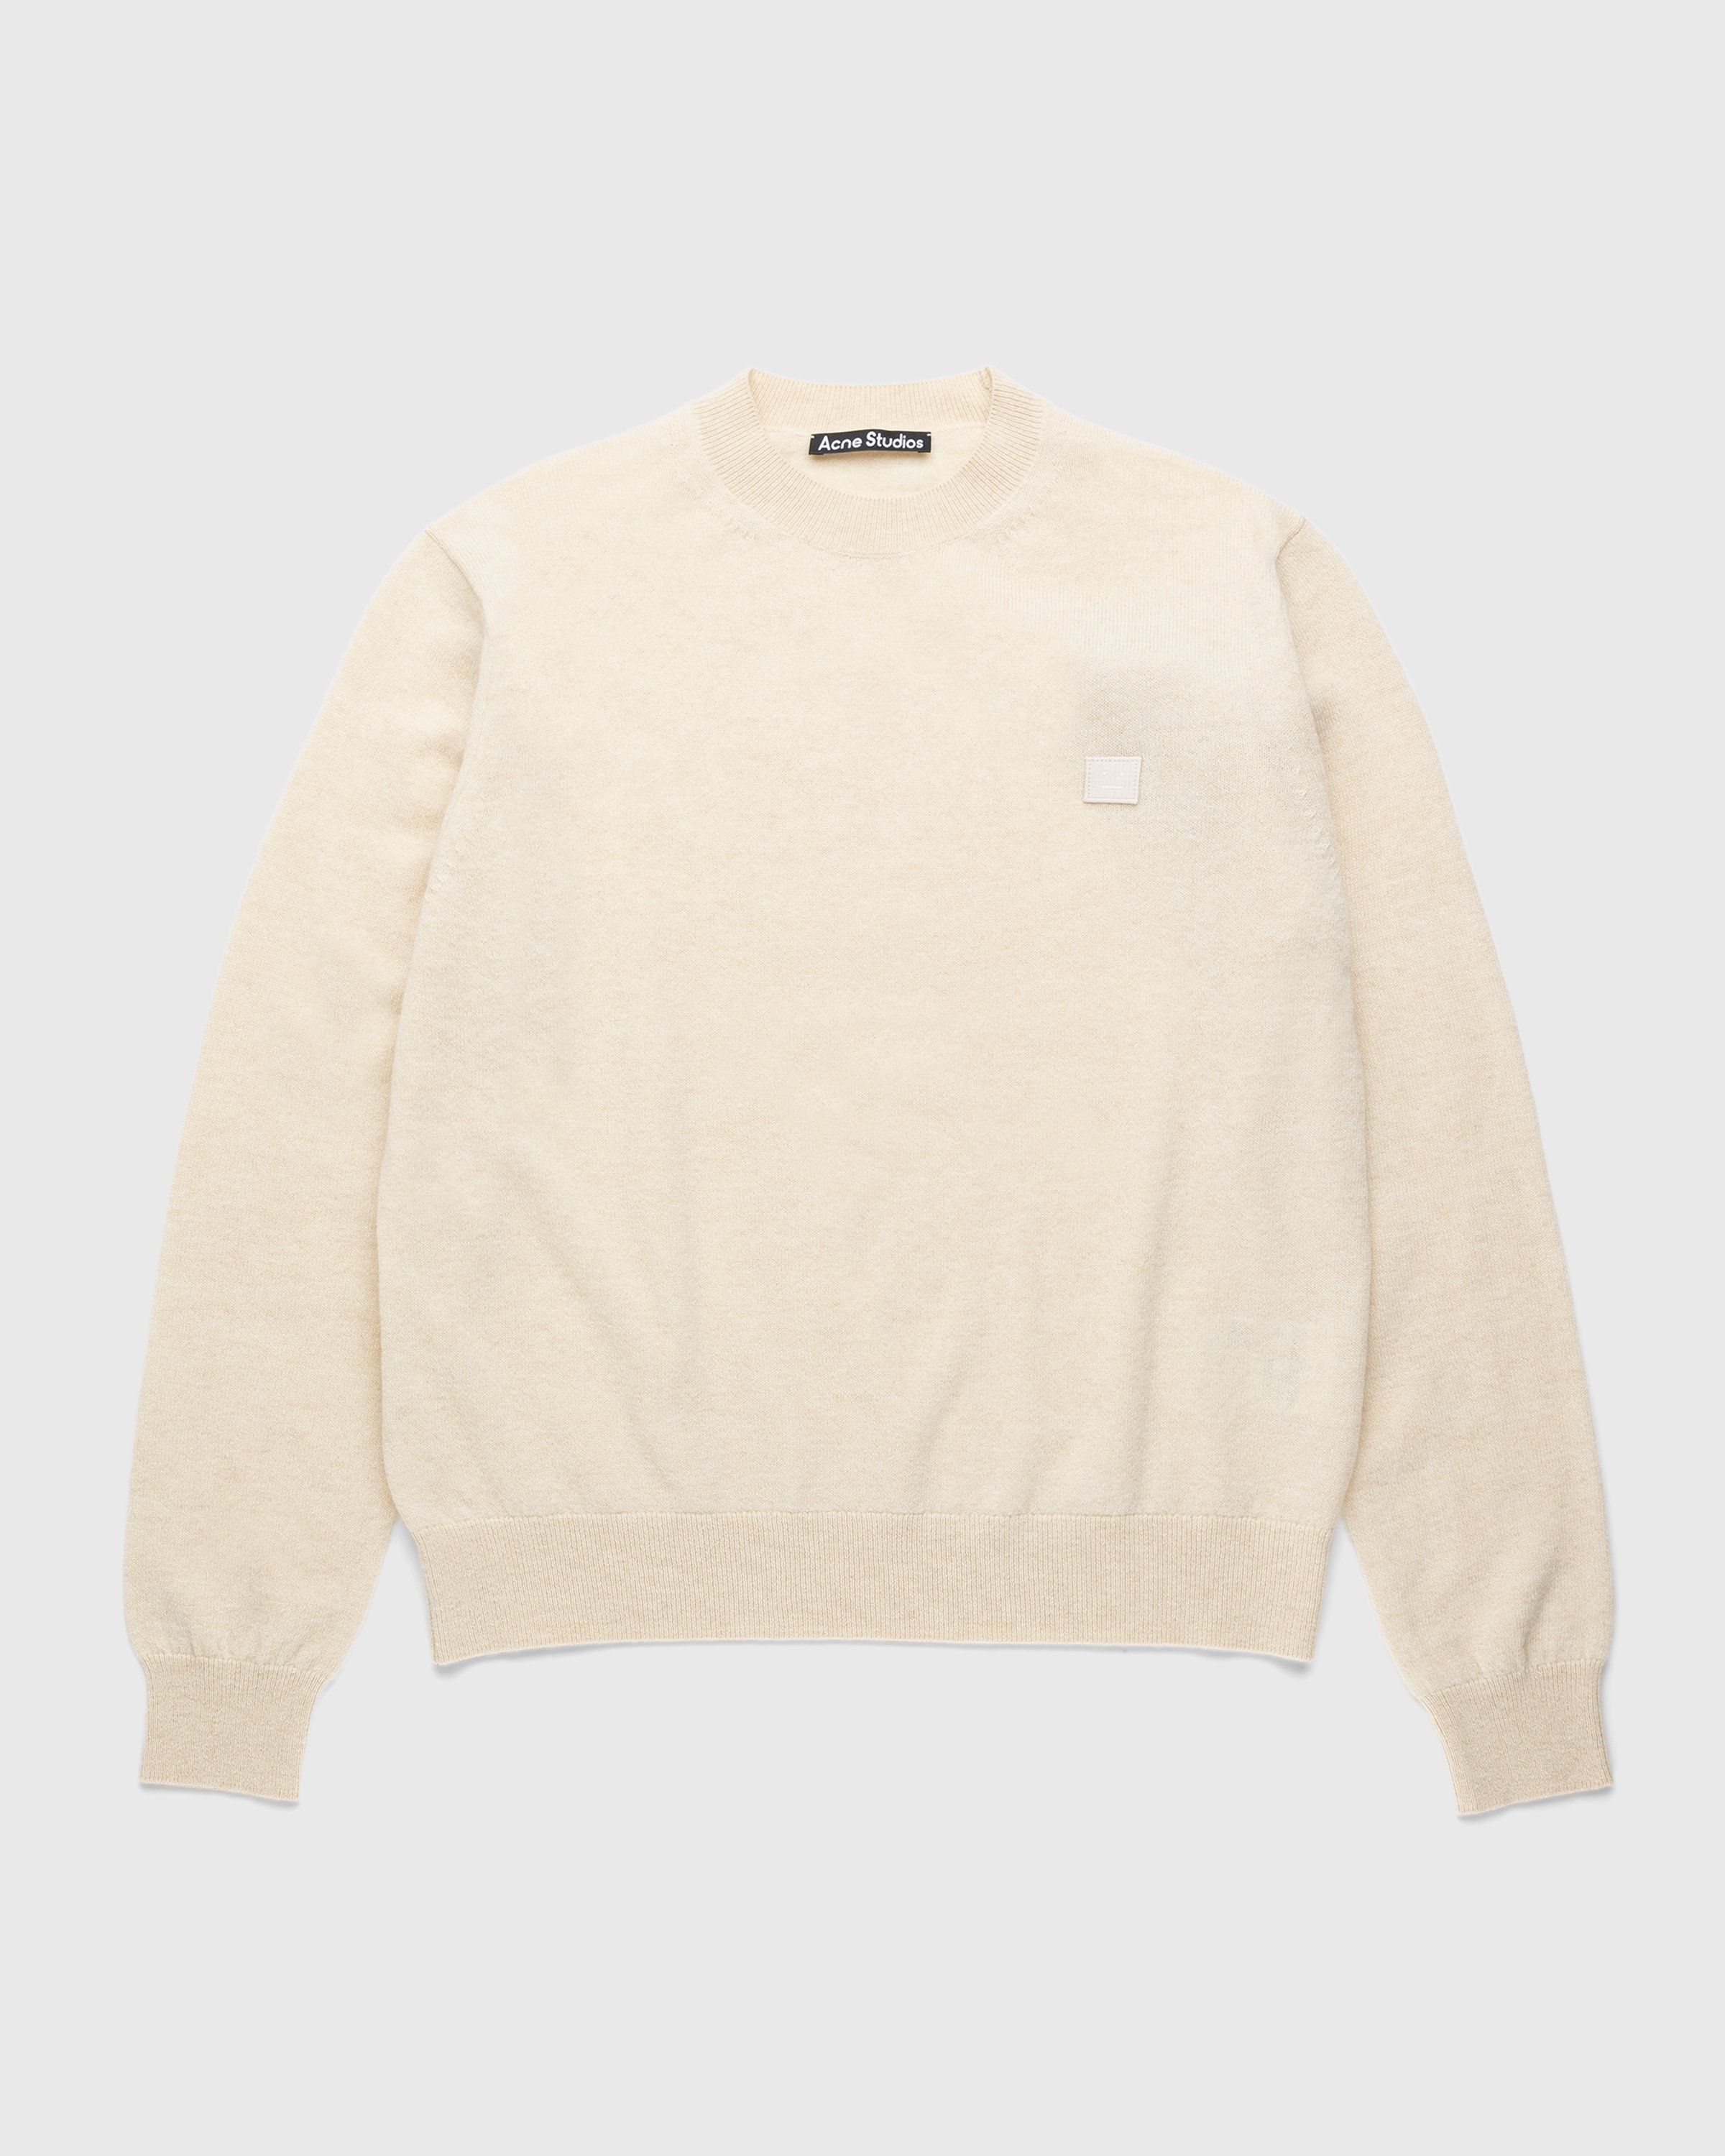 Acne Studios - Wool Crewneck Sweater Oatmeal Melange - Clothing - Beige - Image 1